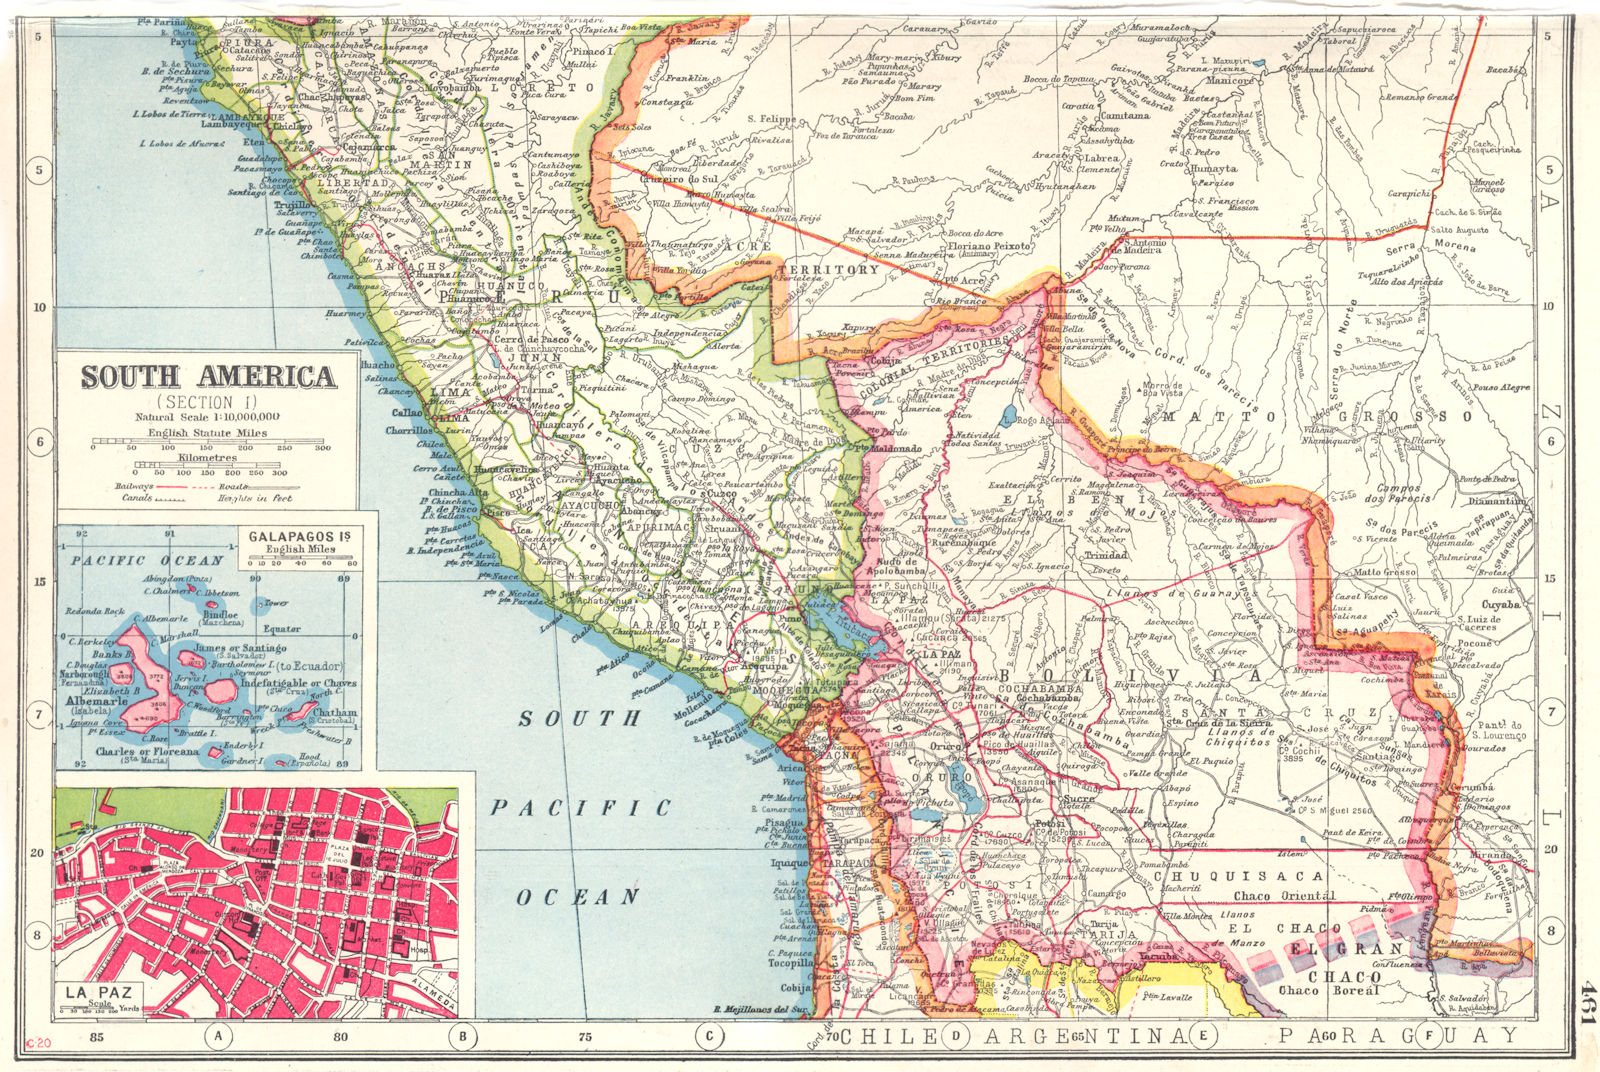 BOLIVIA & COASTAL PERU. inset Galapagos lslands & plan of La Paz 1920 old map